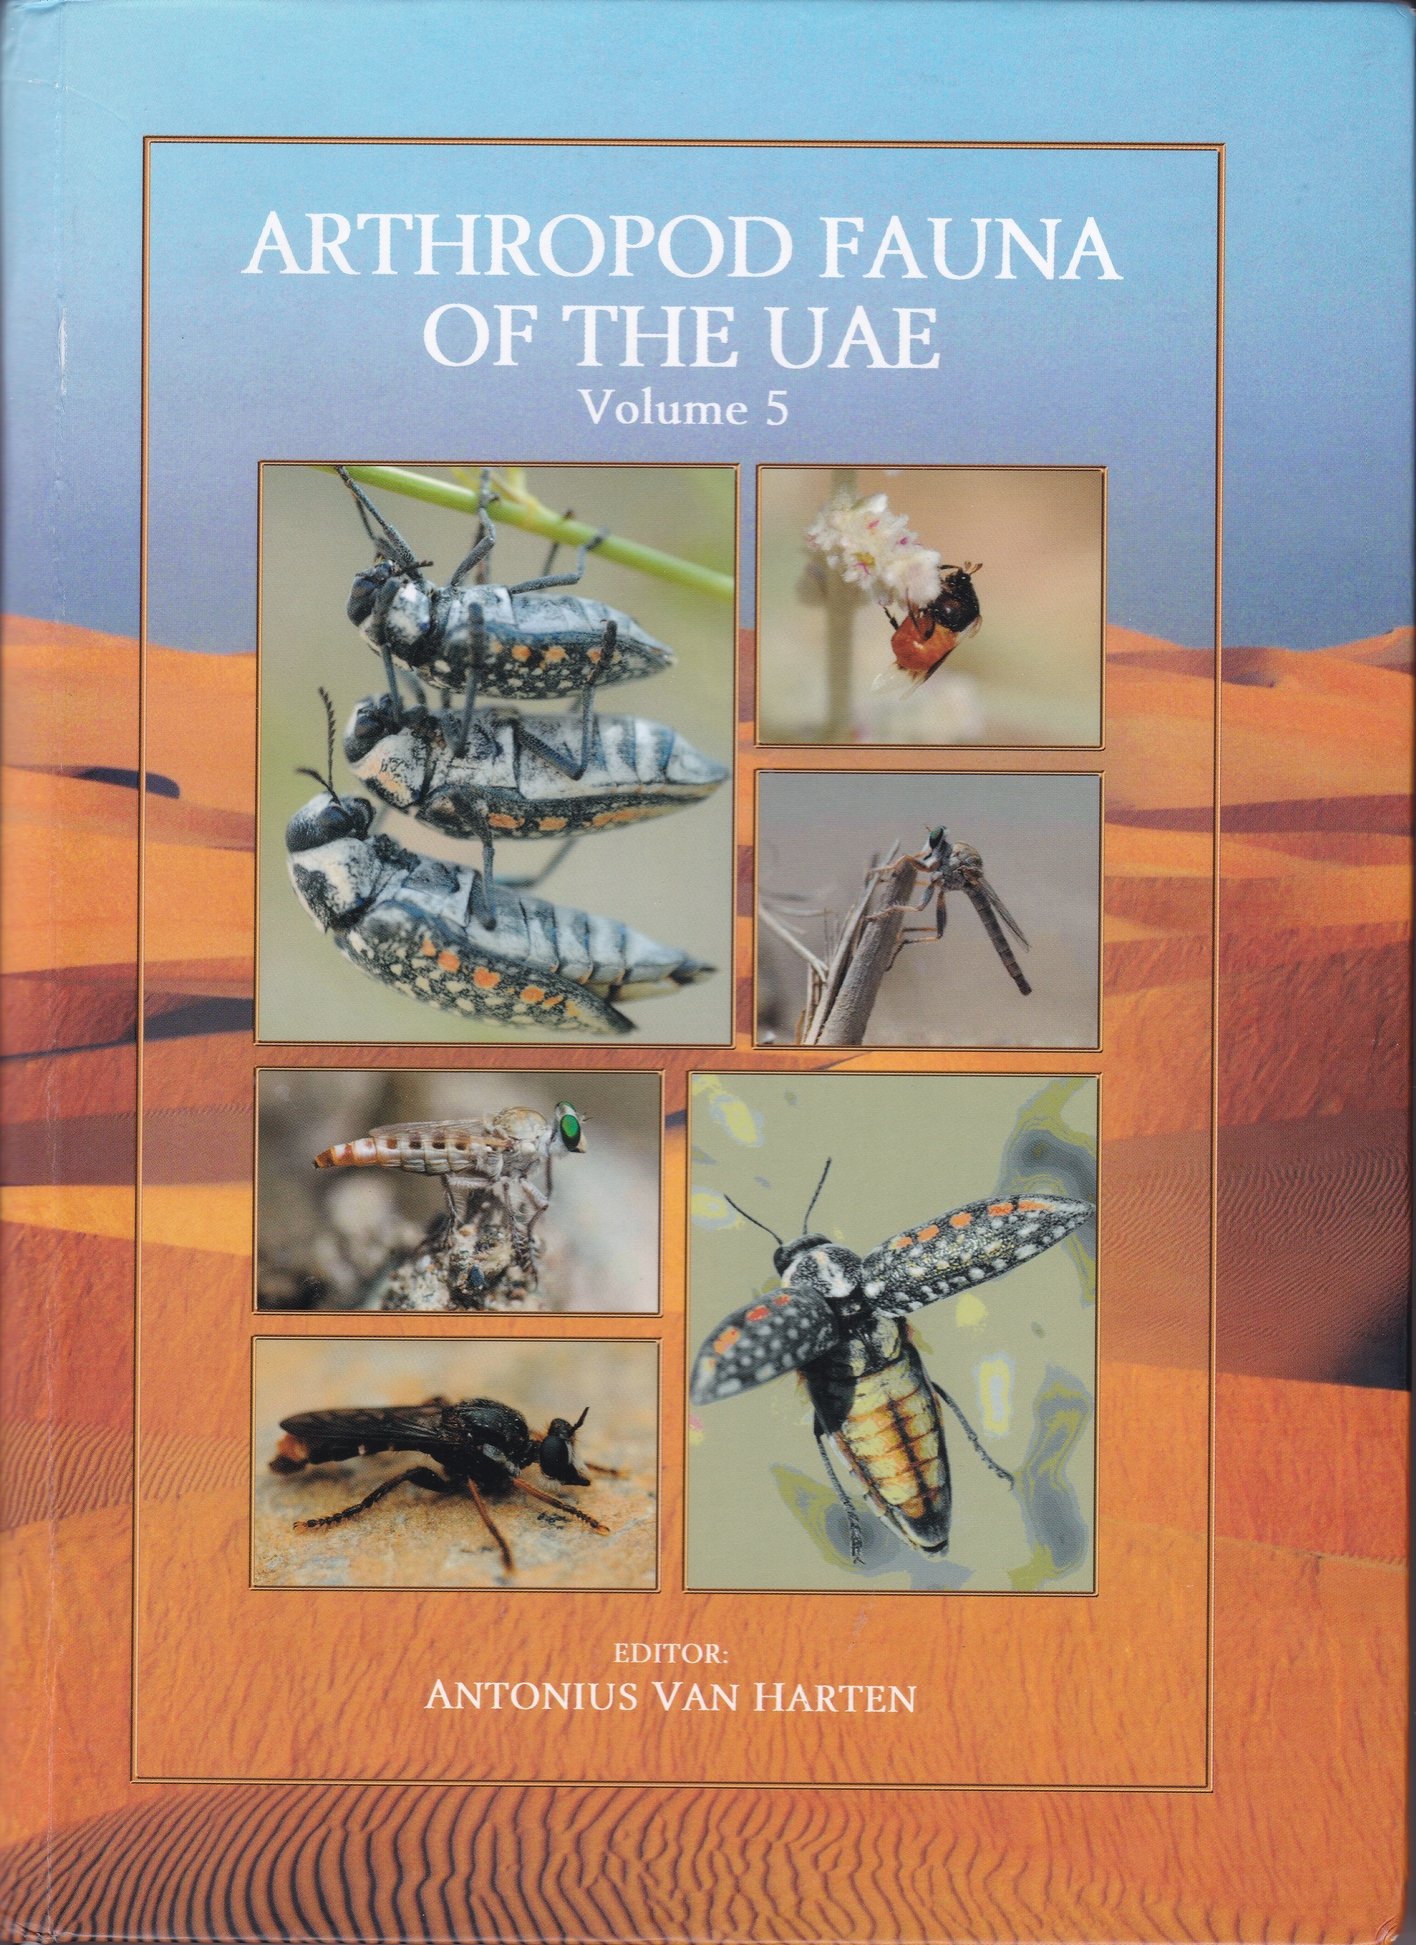 Arthropod fauna of the United Arab Emirates volume 5. (Rippl-Rónai Múzeum CC BY-NC-ND)